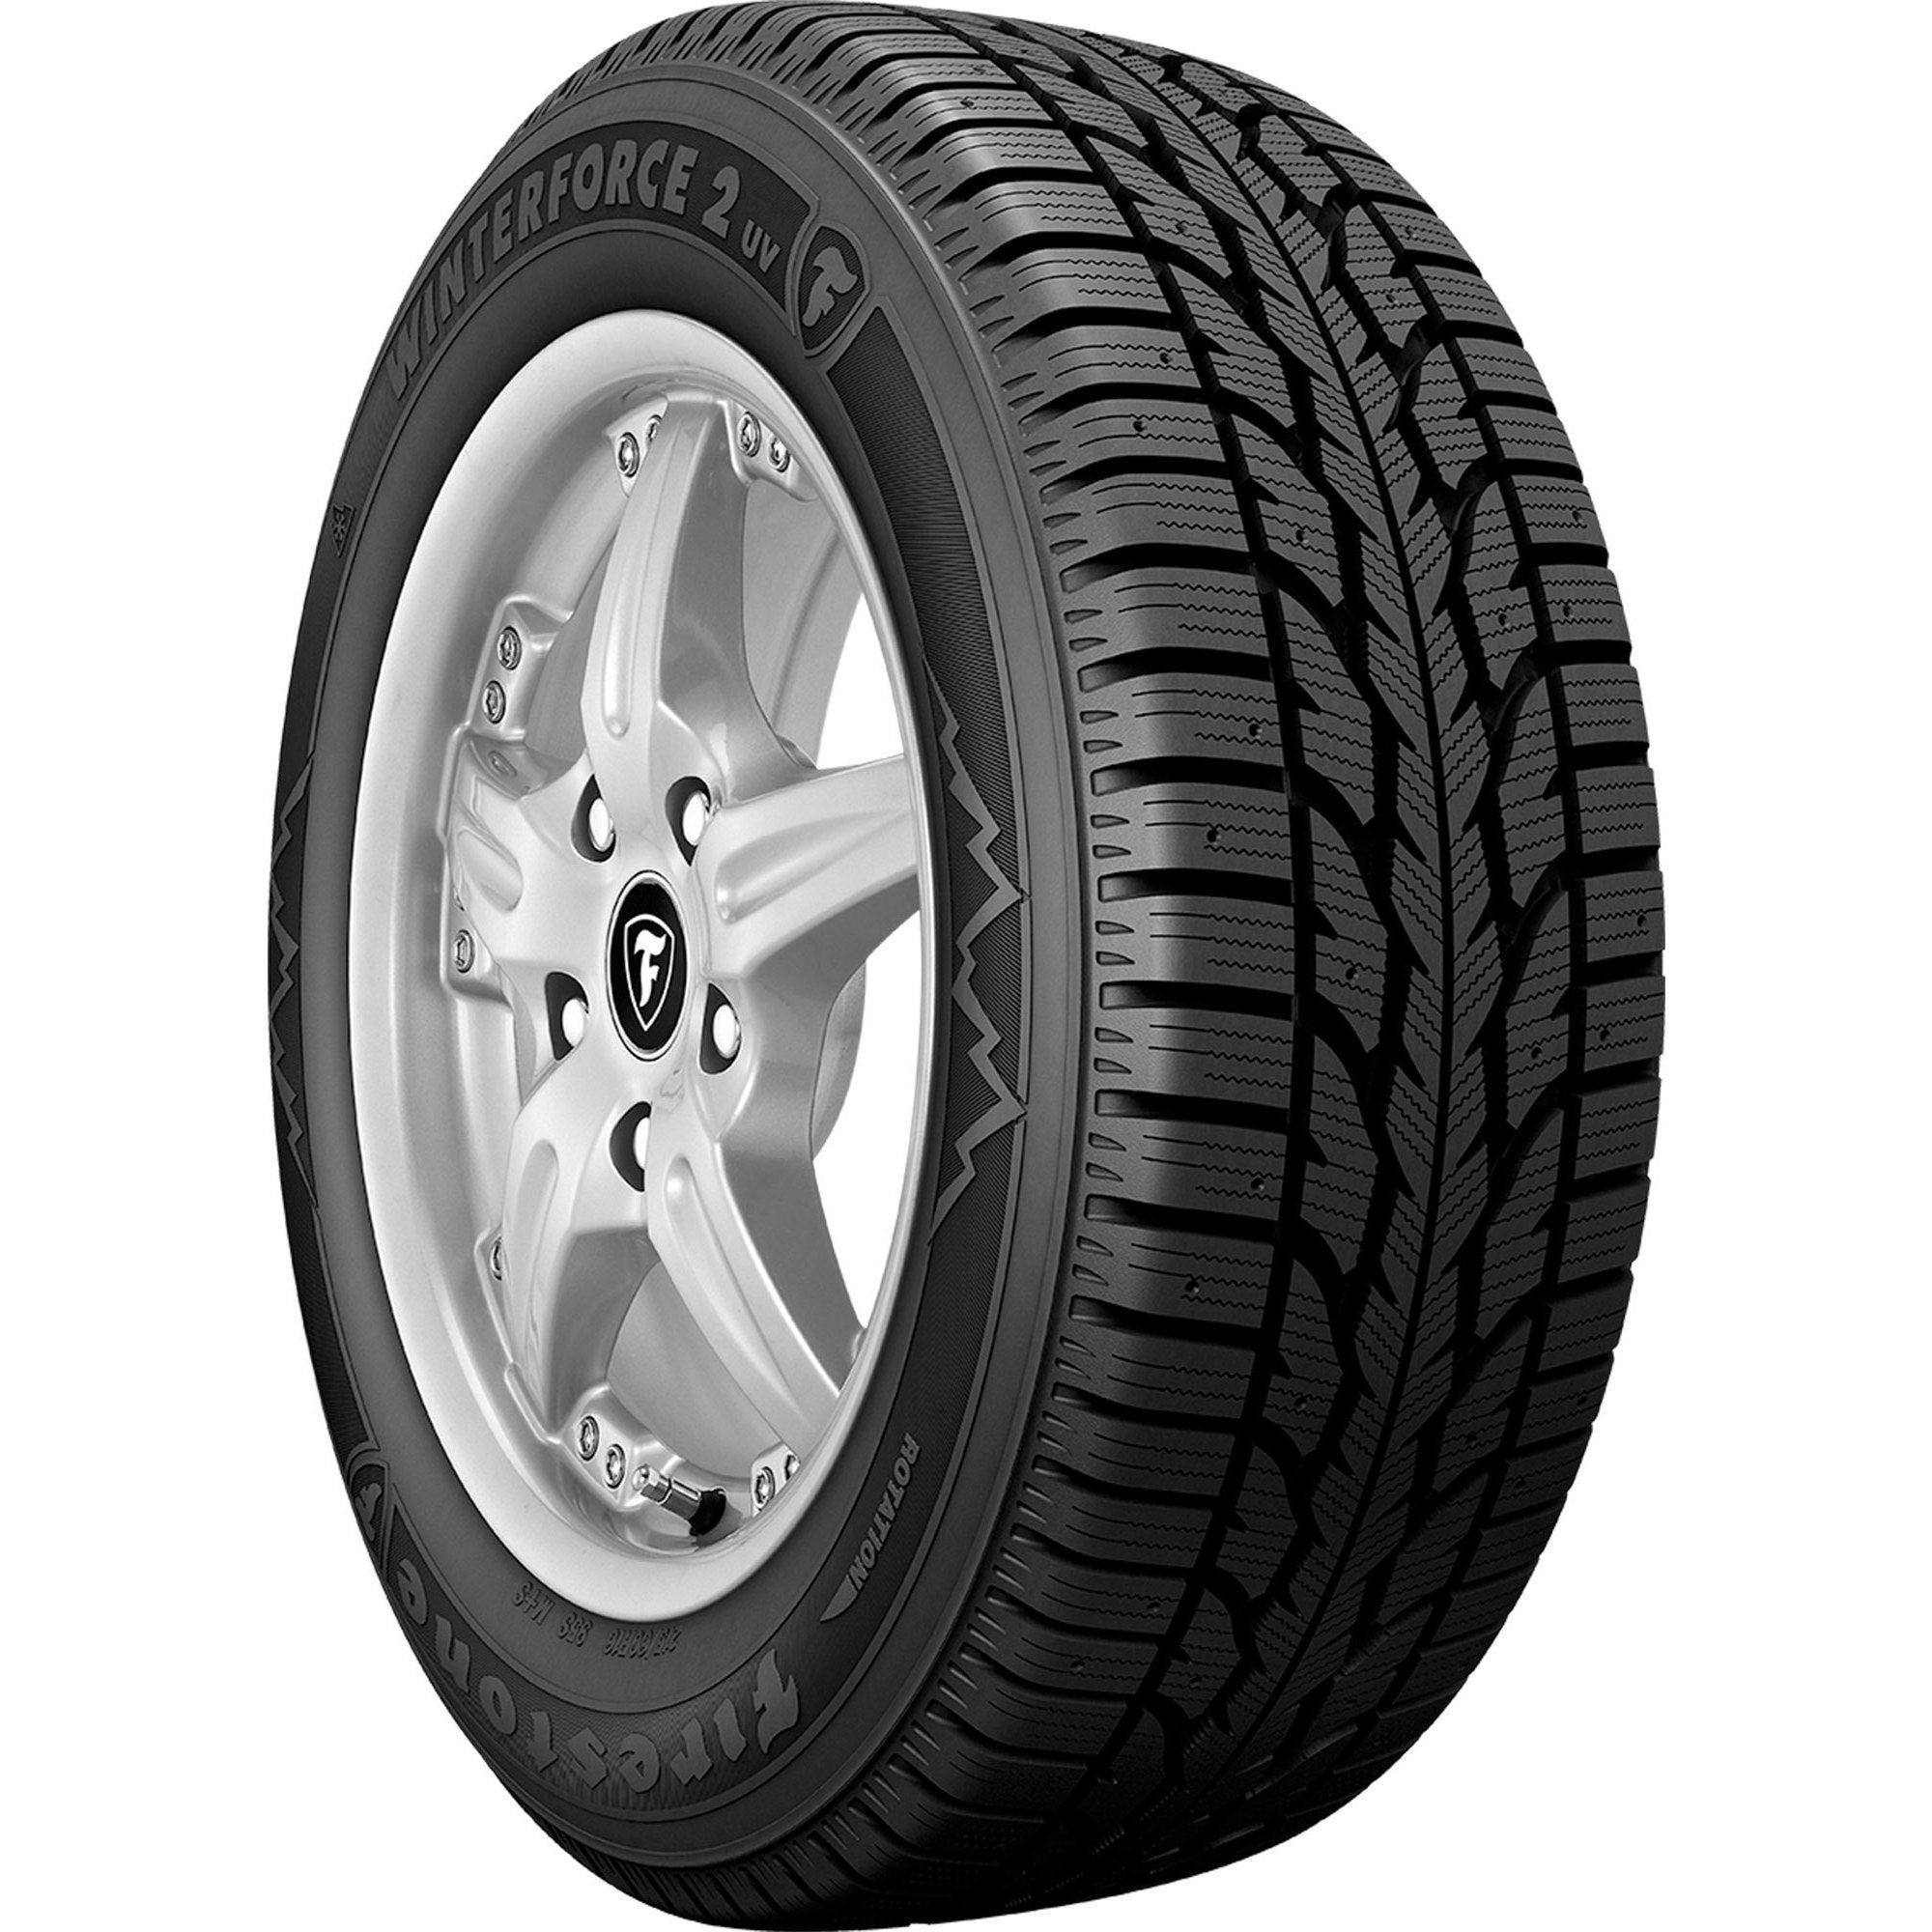 FIRESTONE WINTERFORCE2 UV P235/70R16 (29X9.3R 16) Tires